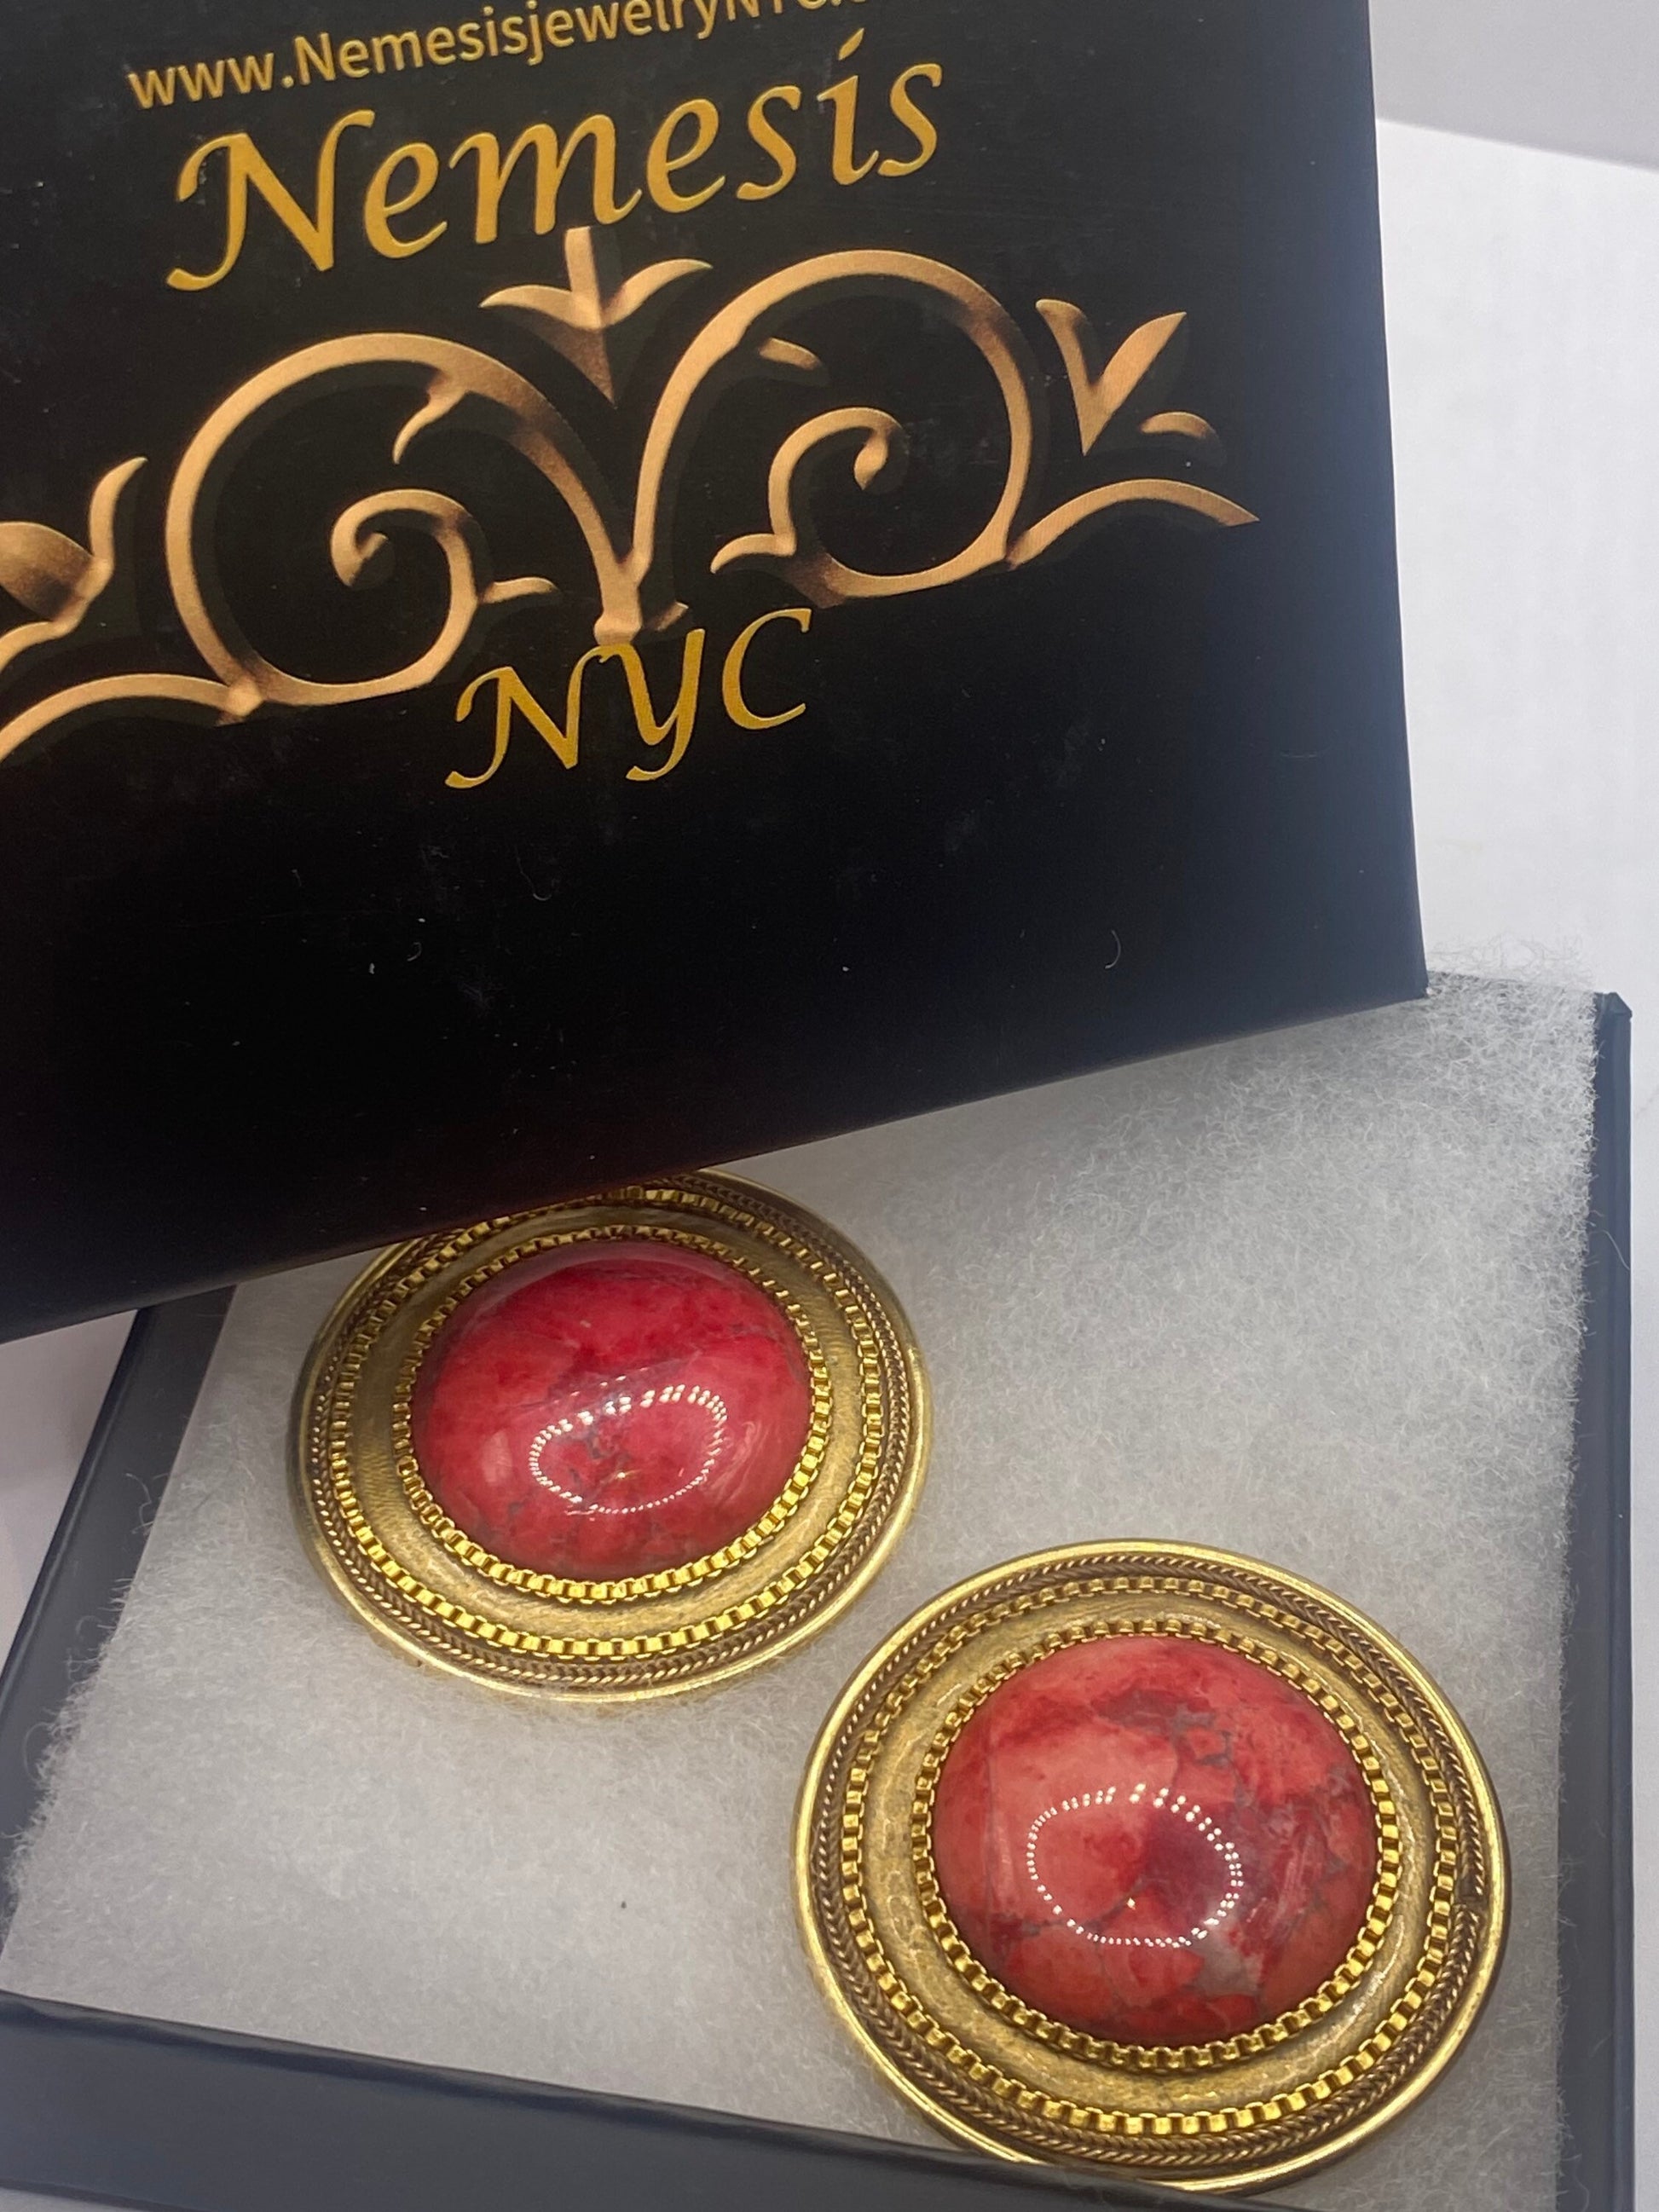 Vintage Pink Cherry Quartz Earrings in Golden Bronze Clip-On